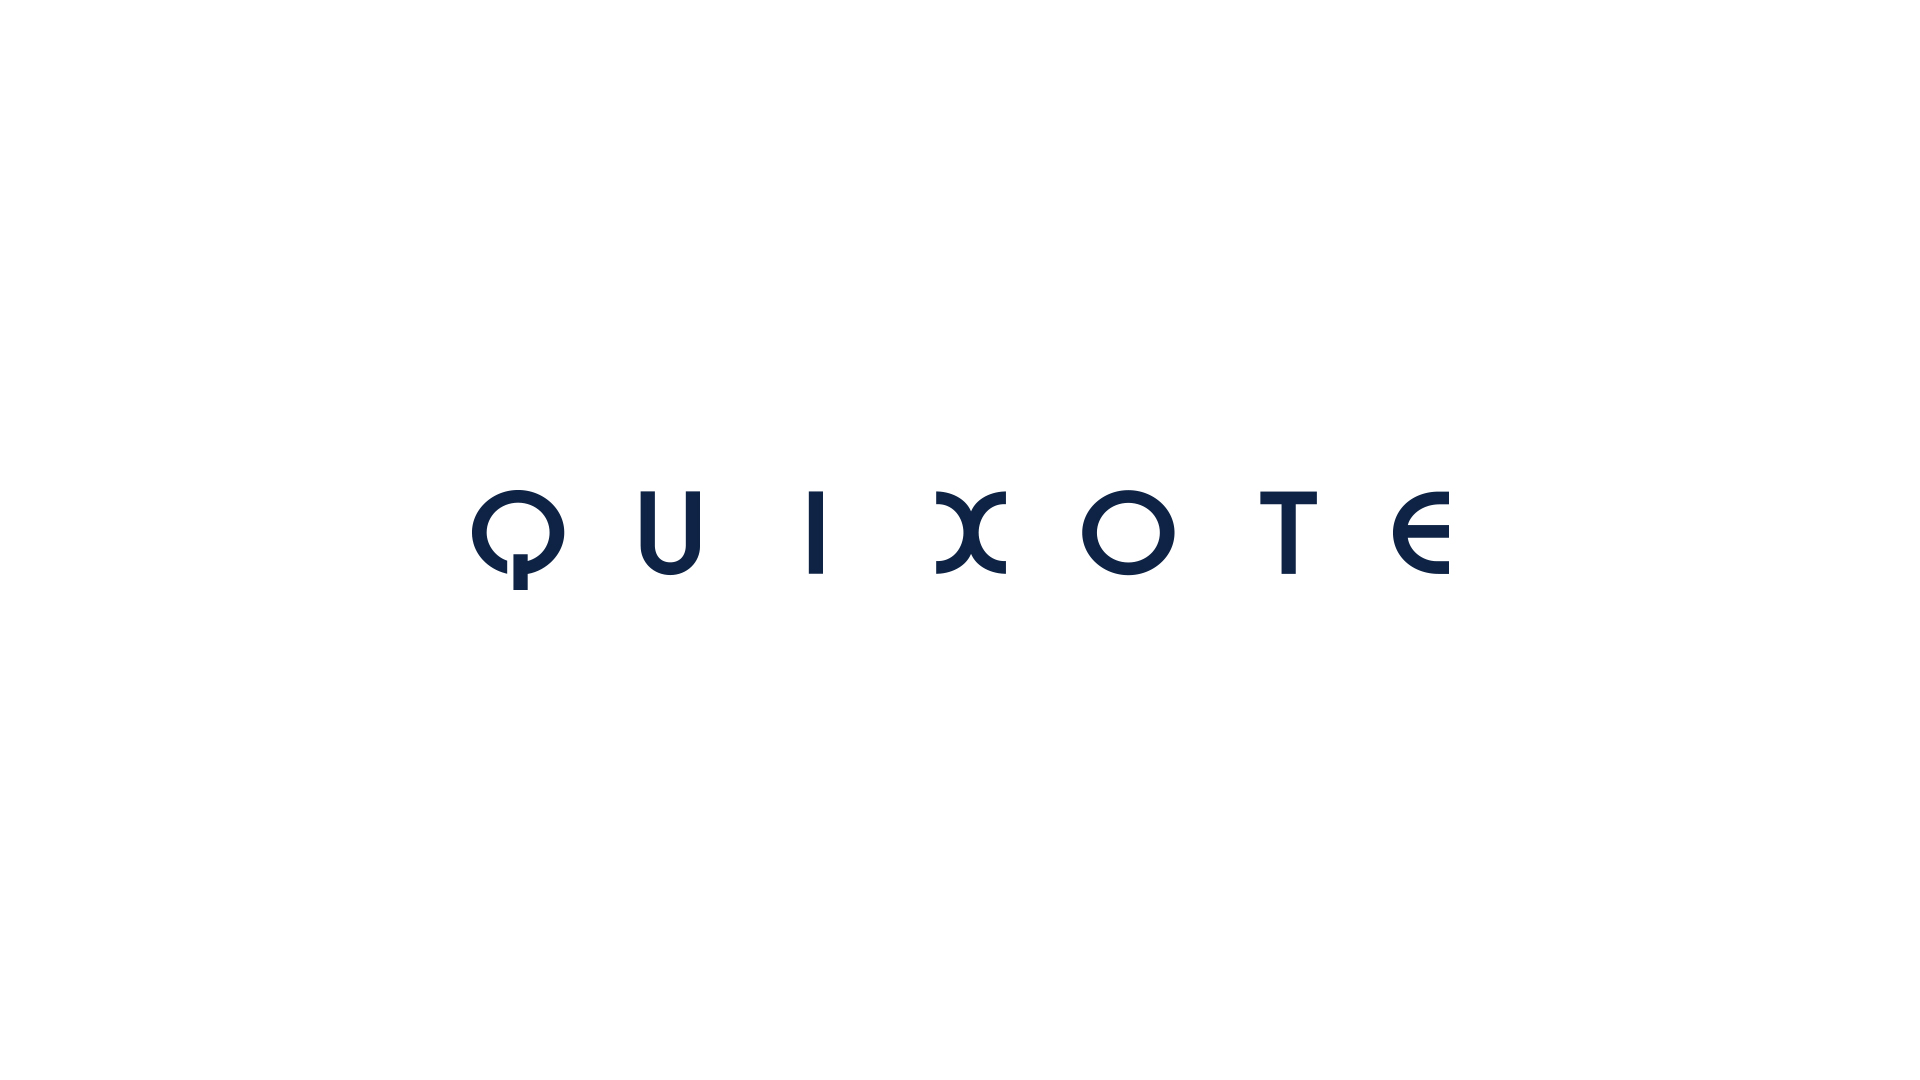 Quixote Expendables/Studio Store - Hollywood | 1000 N Cahuenga Blvd, Los Angeles, CA, 90038 | +1 (323) 960-9191